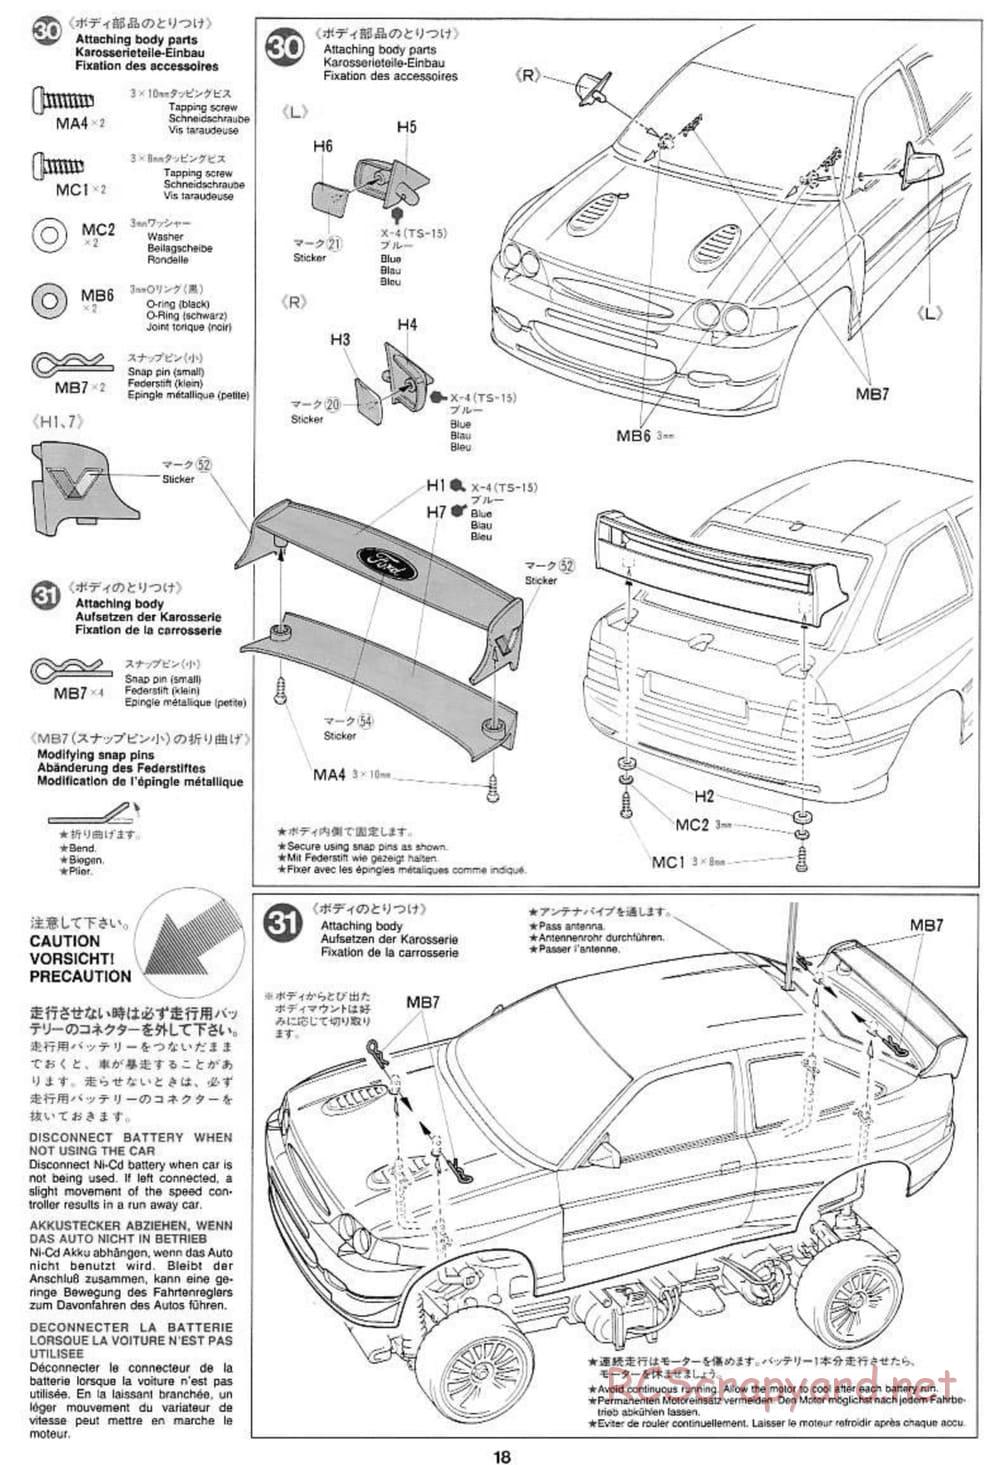 Tamiya - Ford Escort WRC - TL-01 Chassis - Manual - Page 18